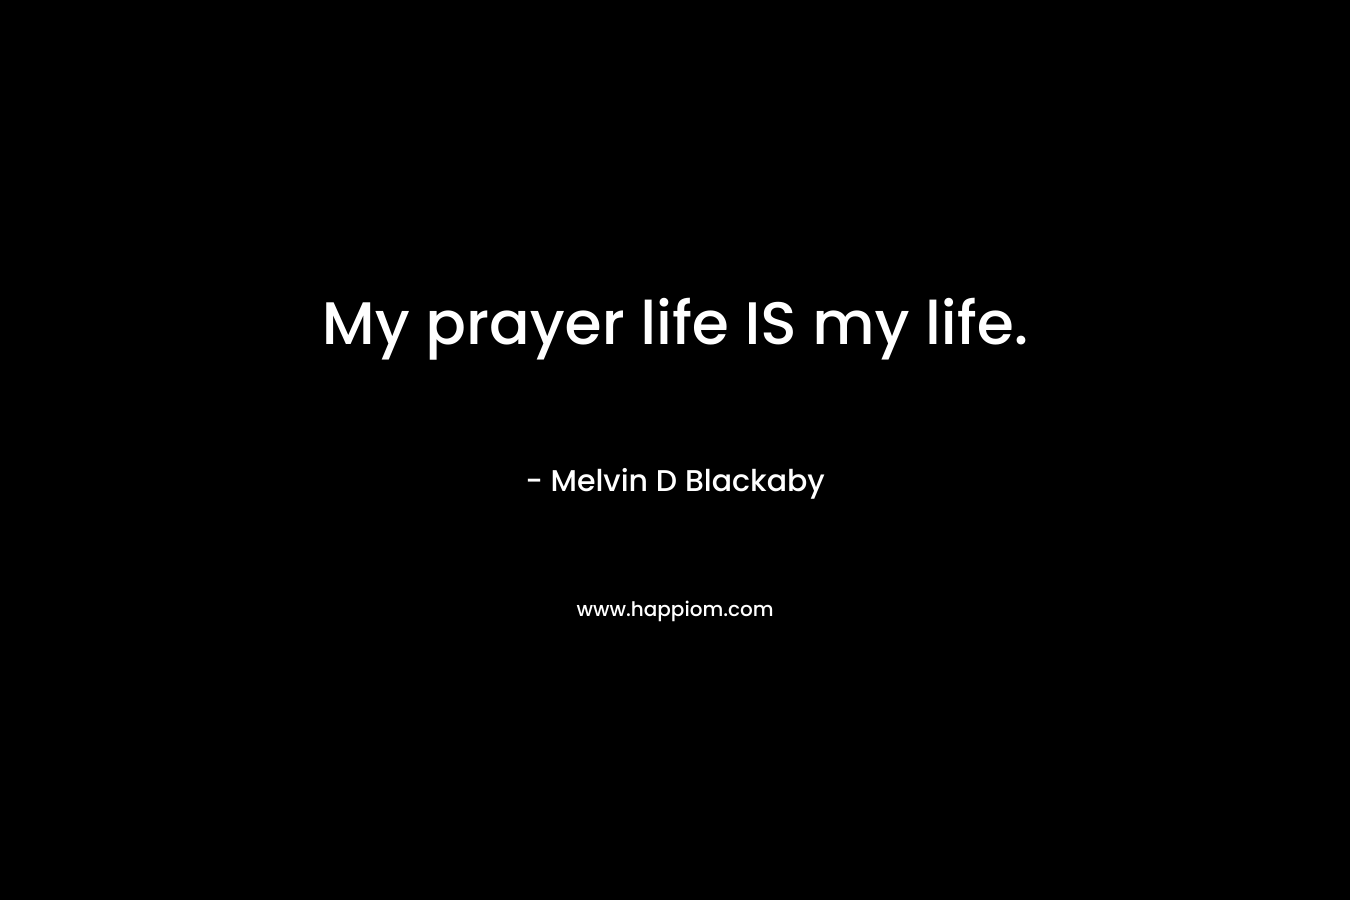 My prayer life IS my life.